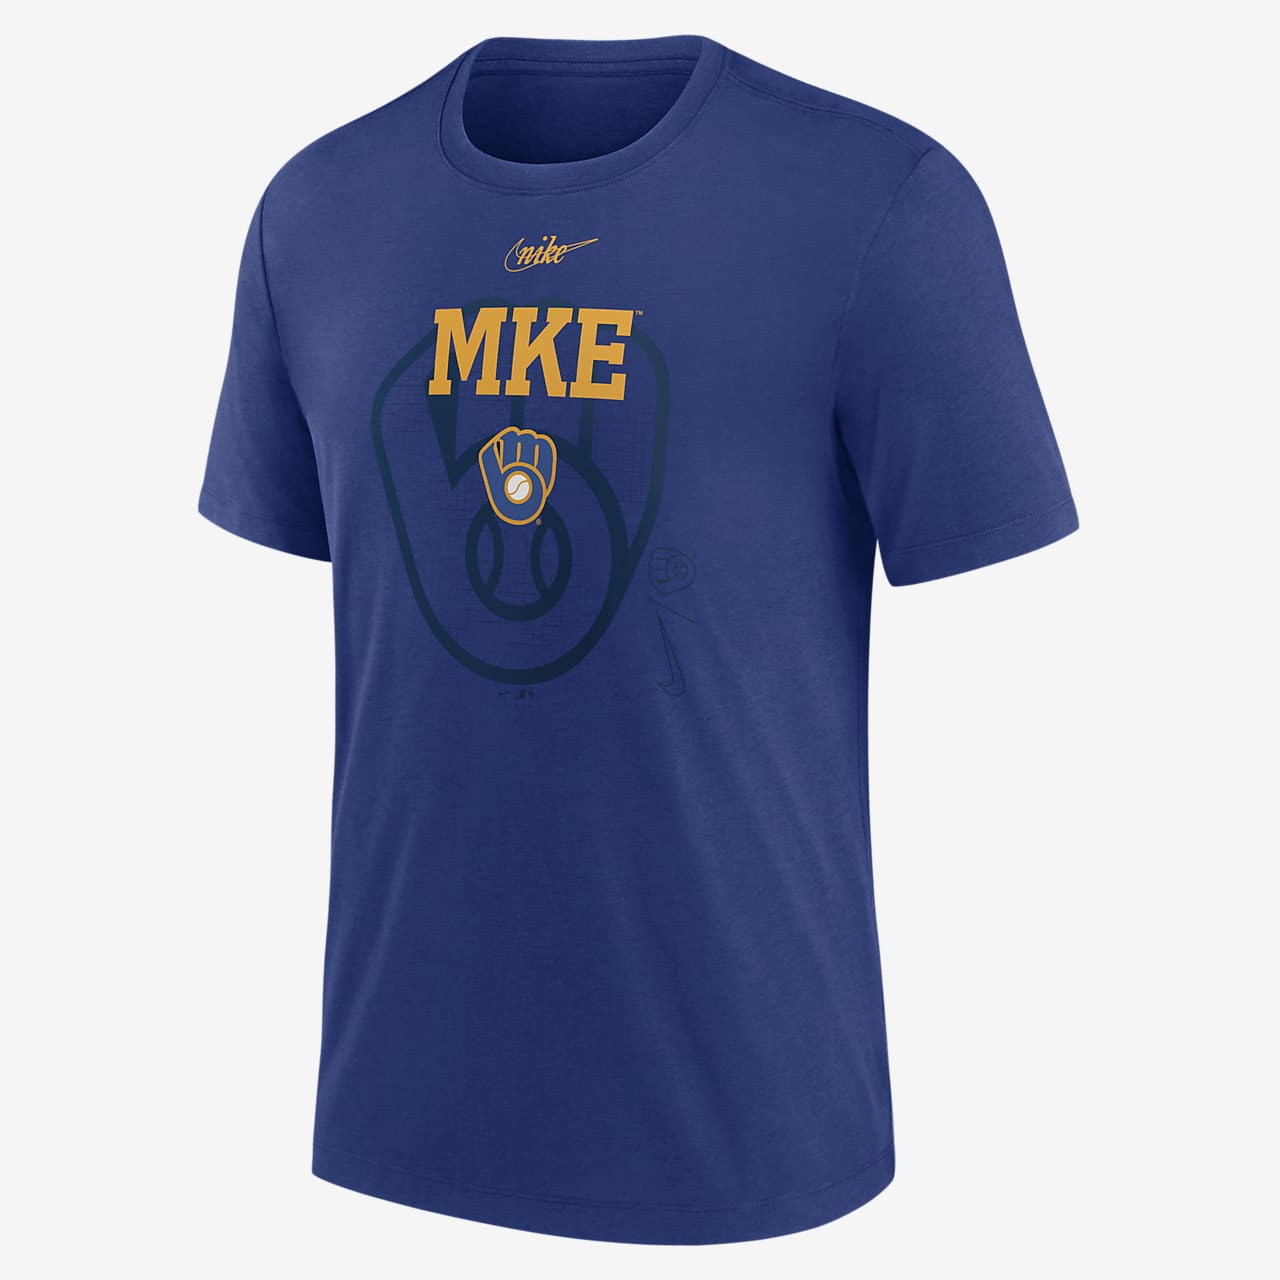 Nike Rewind Retro (MLB Milwaukee Brewers) Men's T-Shirt